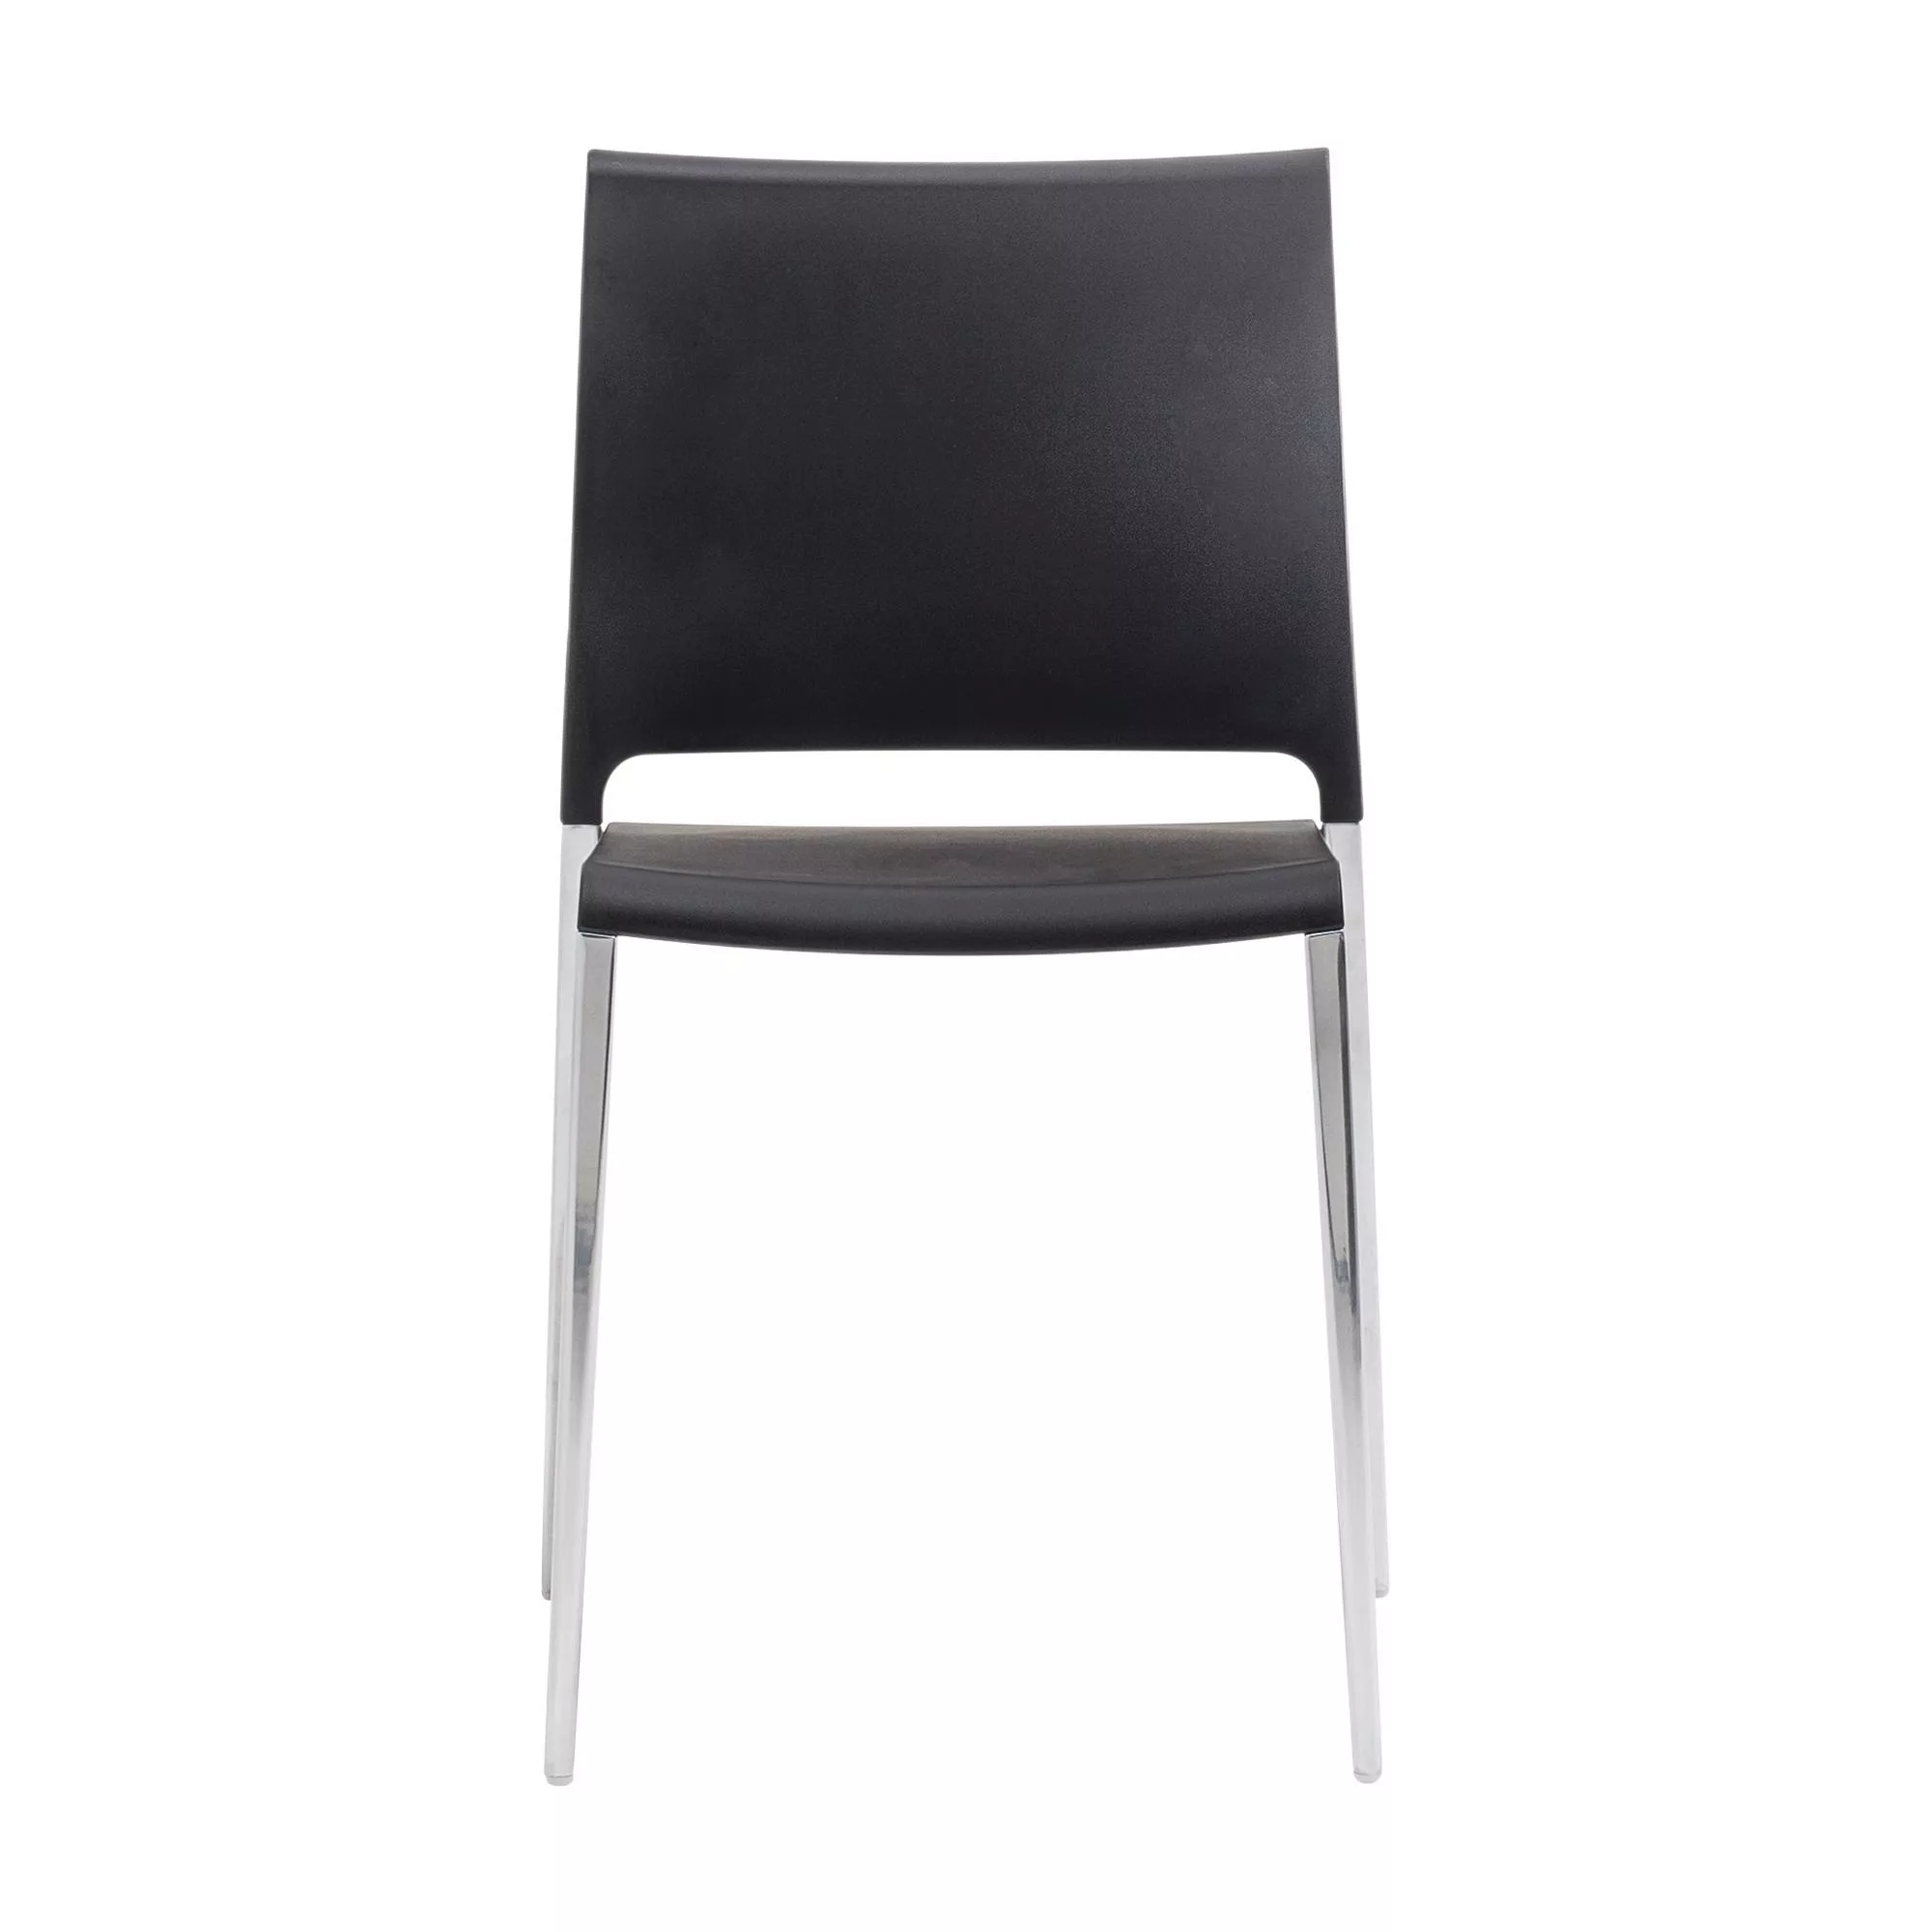 Pedrali - Mya 700 Stuhl - schwarz/HxBxT 79x46.5x53cm/Gestell Aluminium poli günstig online kaufen